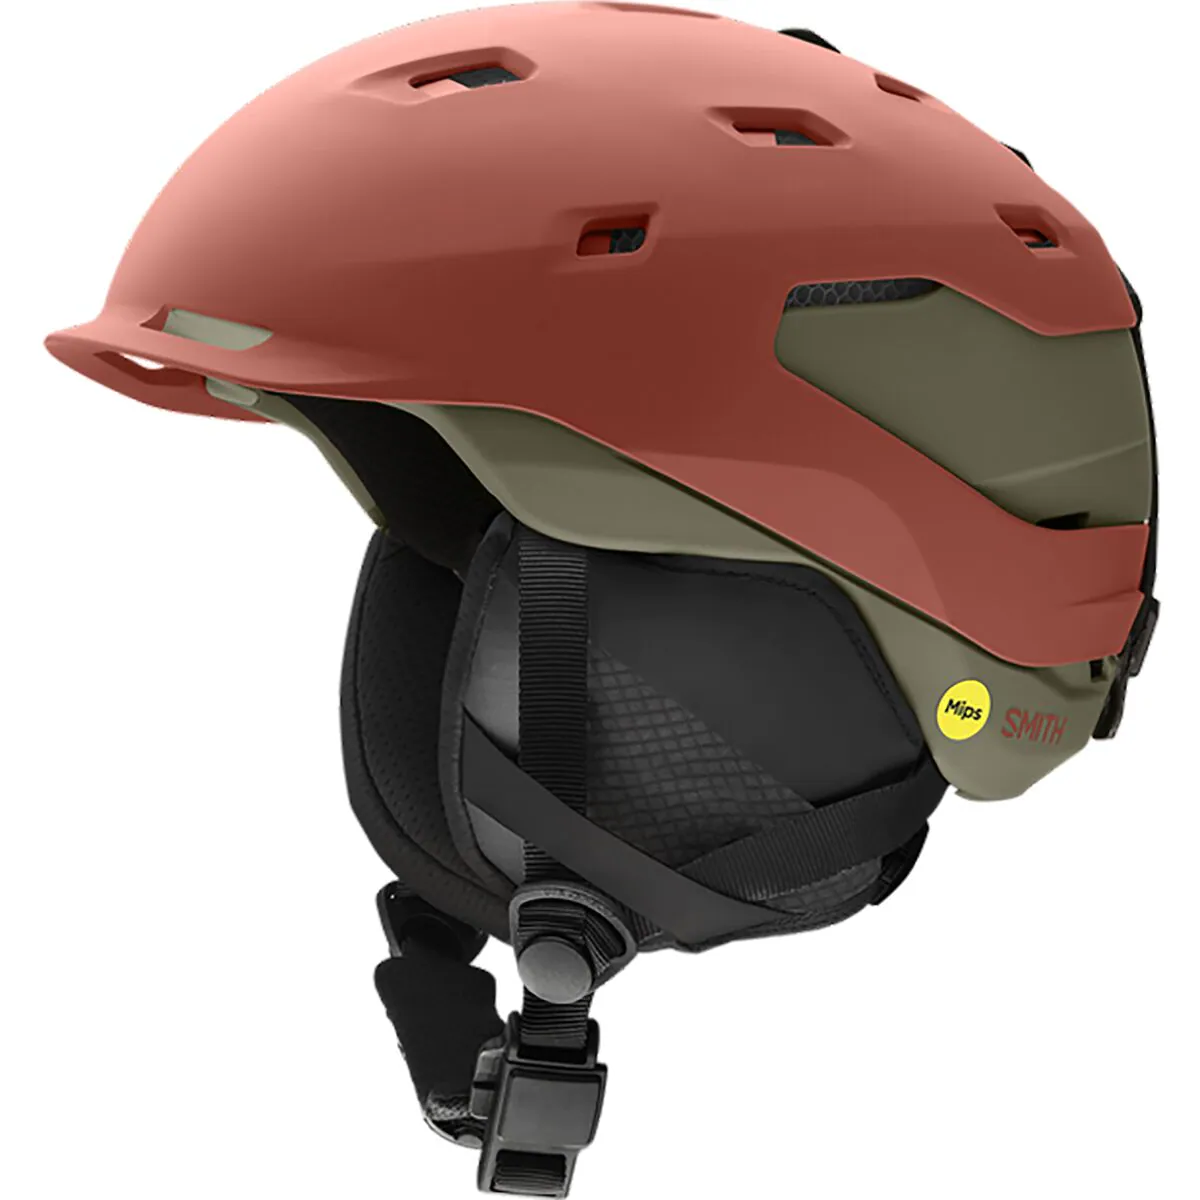 top snowboard helmets 2023: Smith quantum helmets